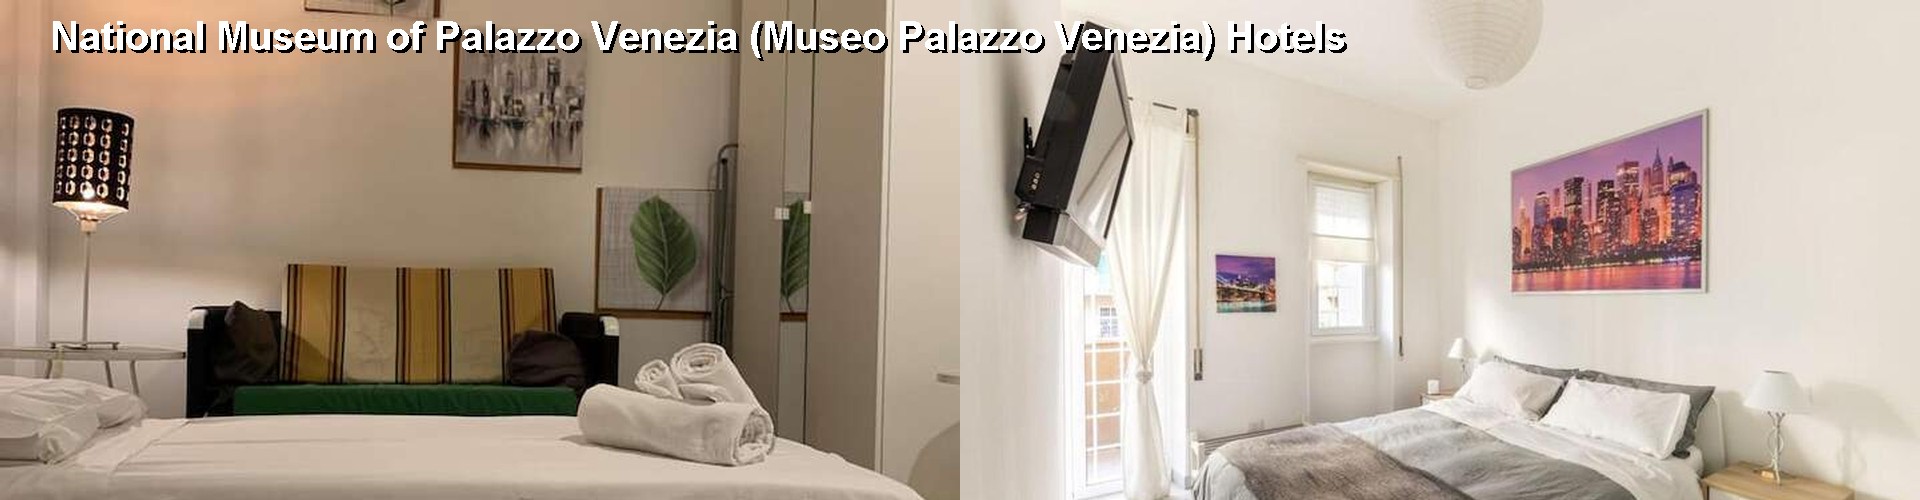 5 Best Hotels near National Museum of Palazzo Venezia (Museo Palazzo Venezia)